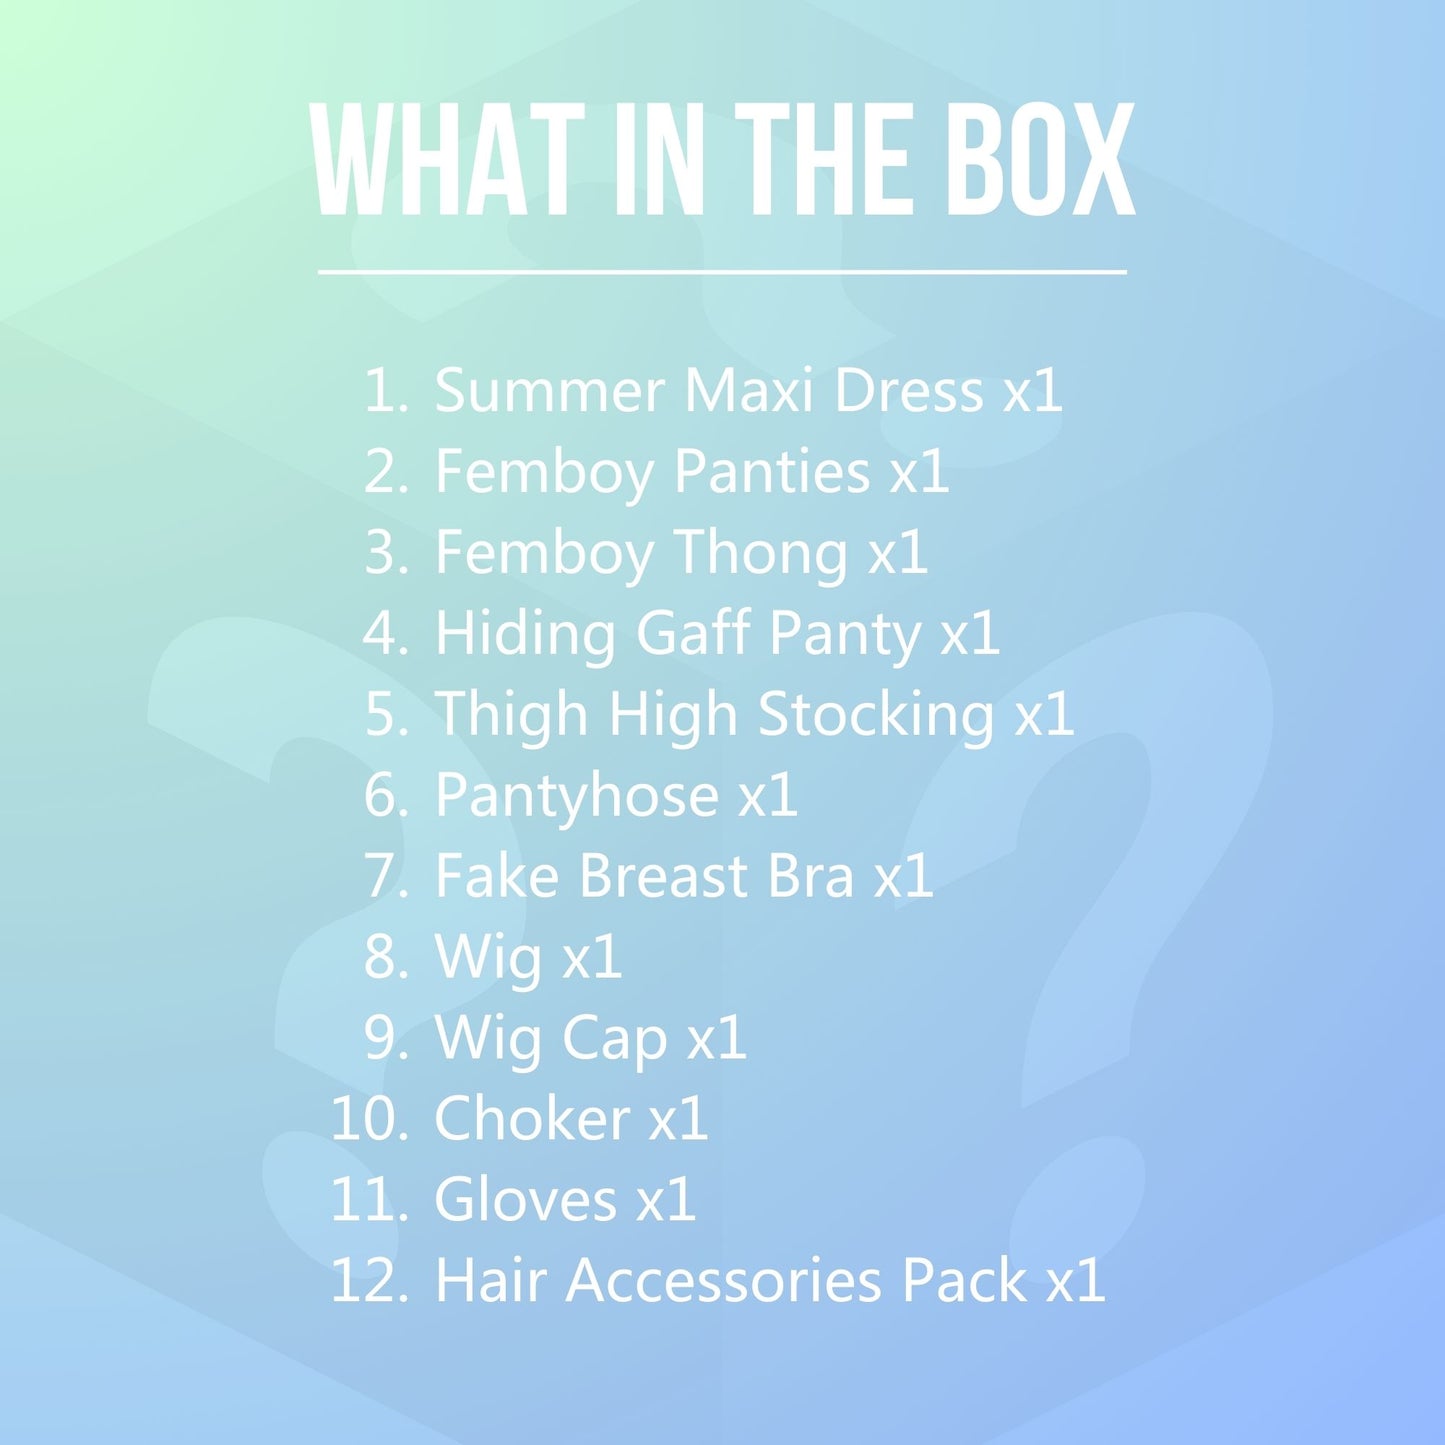 Femboy Starter Kit - Summer Maxi Dress Mystery Box - Femboy Fashion